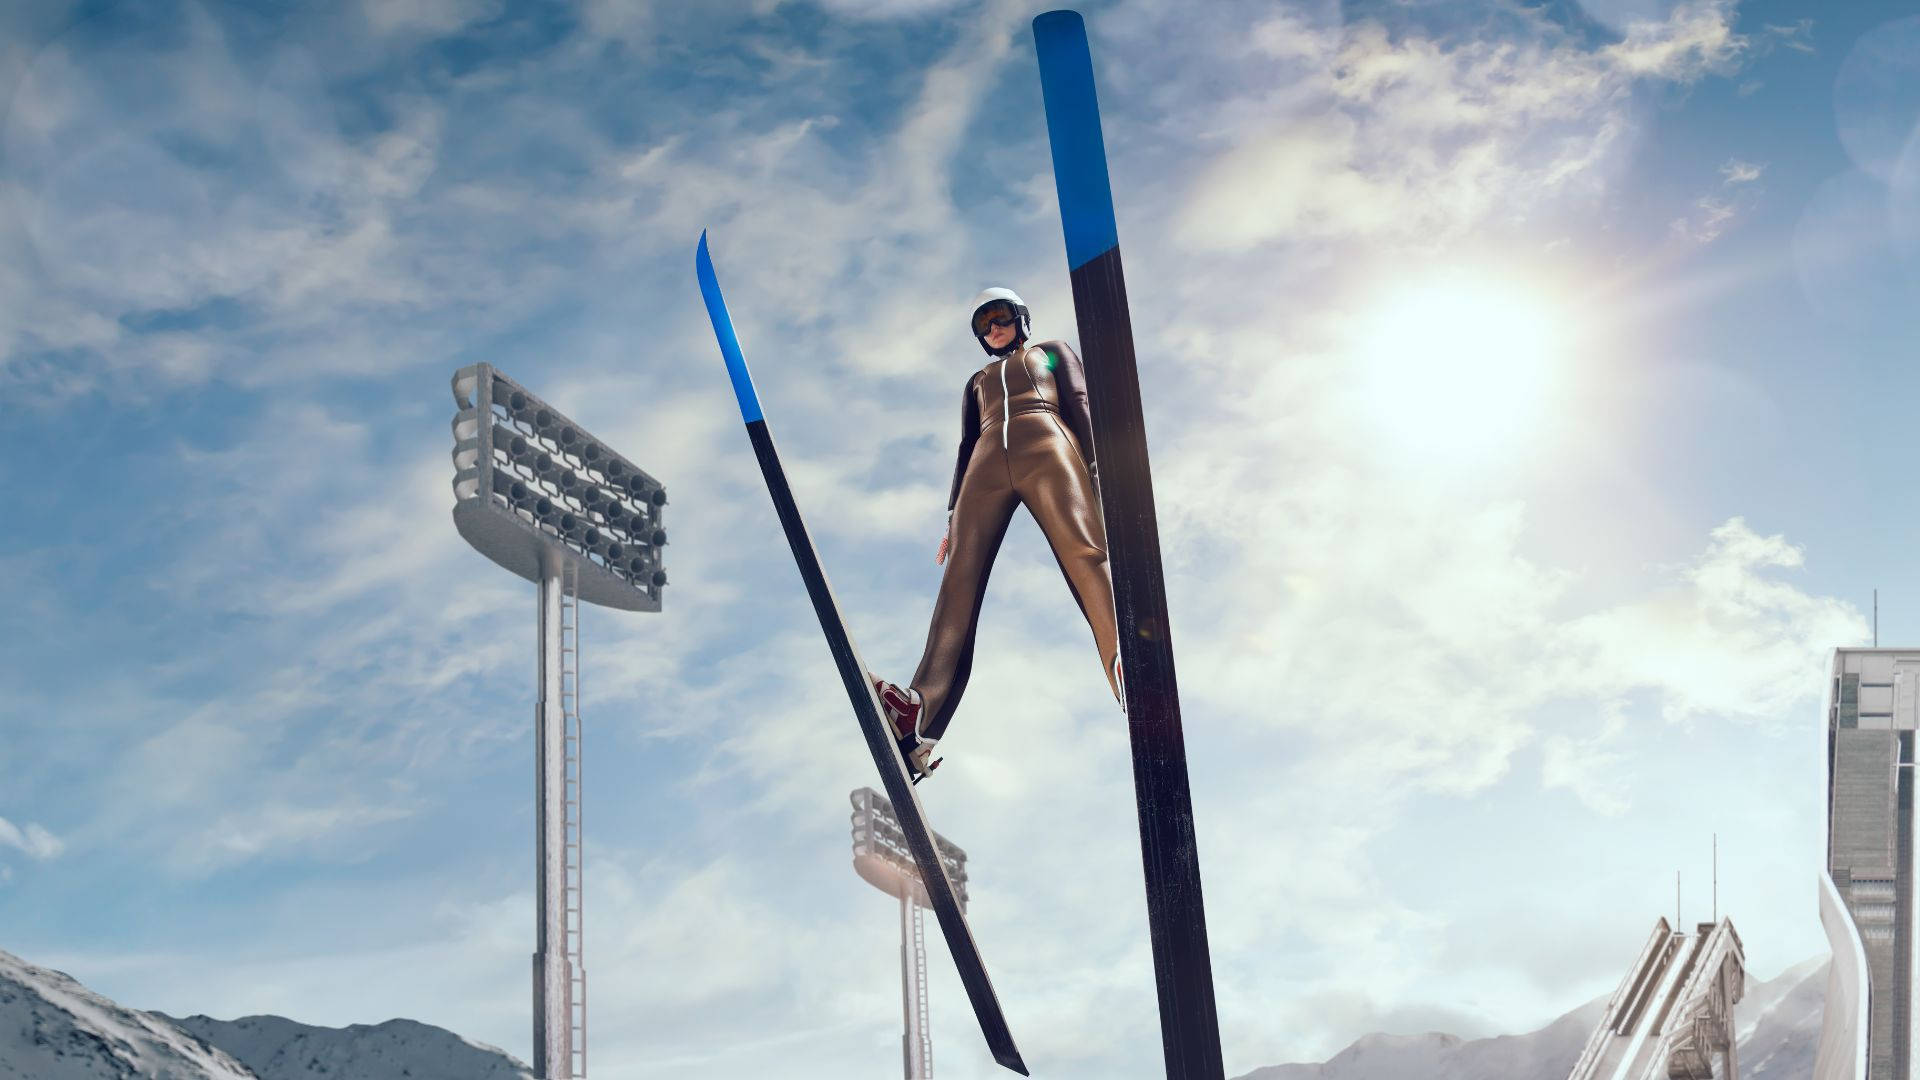 Daredevil Athlete Soaring High In 3d Ski Jumping Game Background